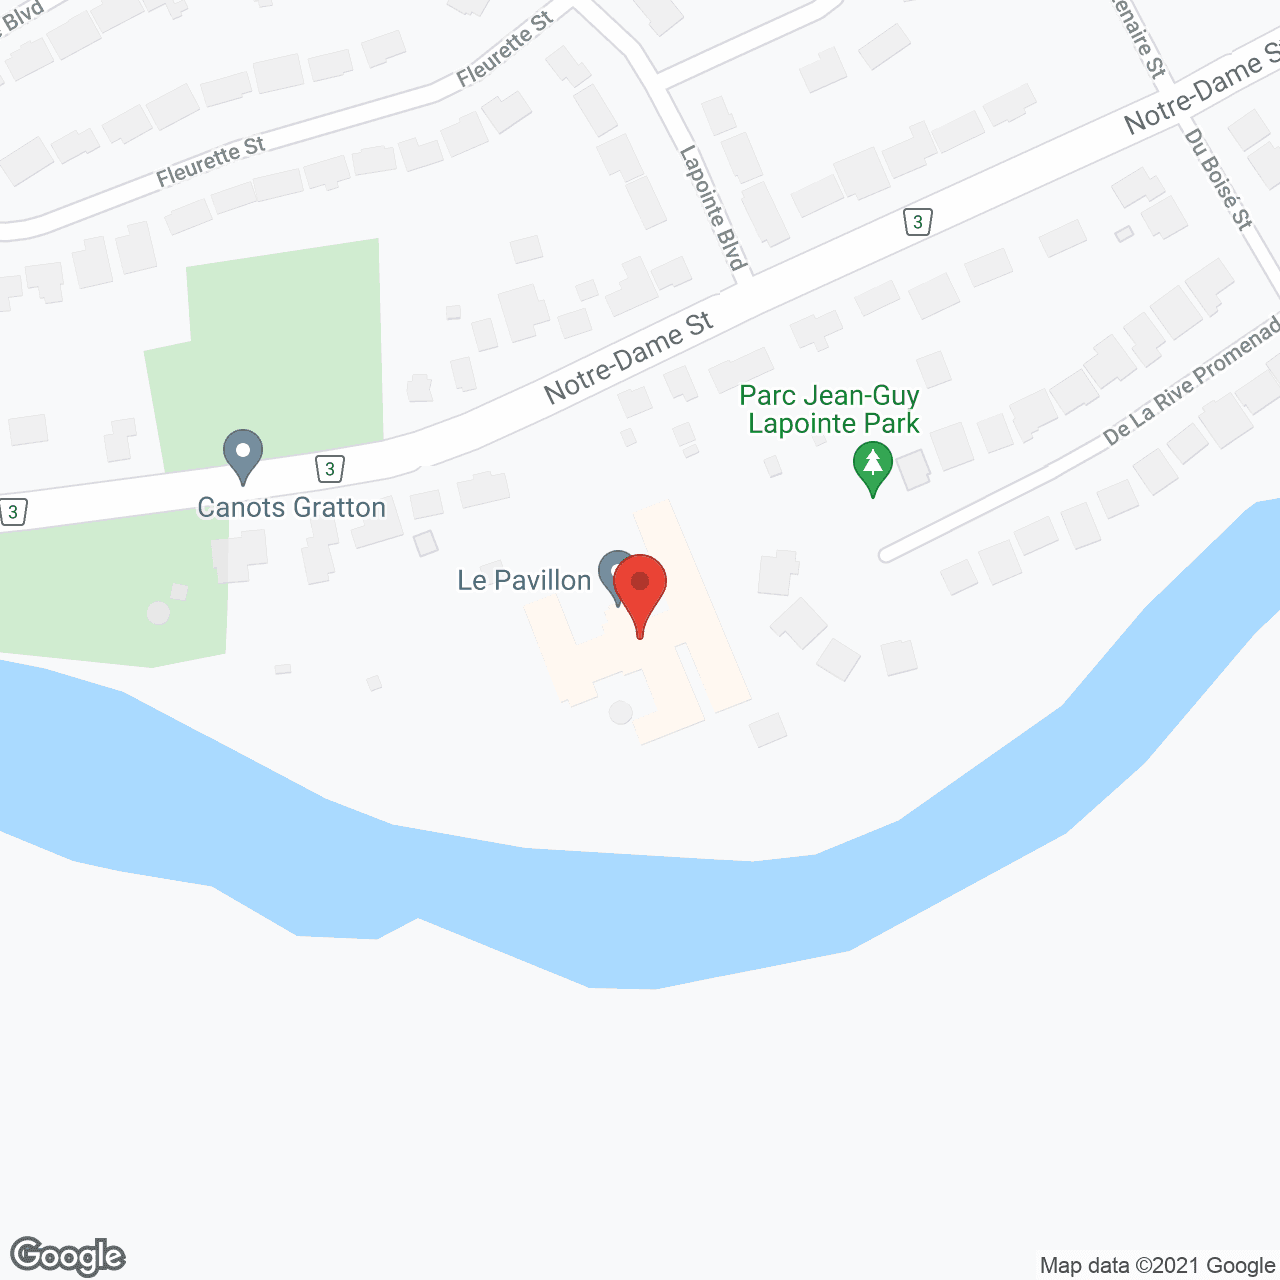 Le Pavillon in google map